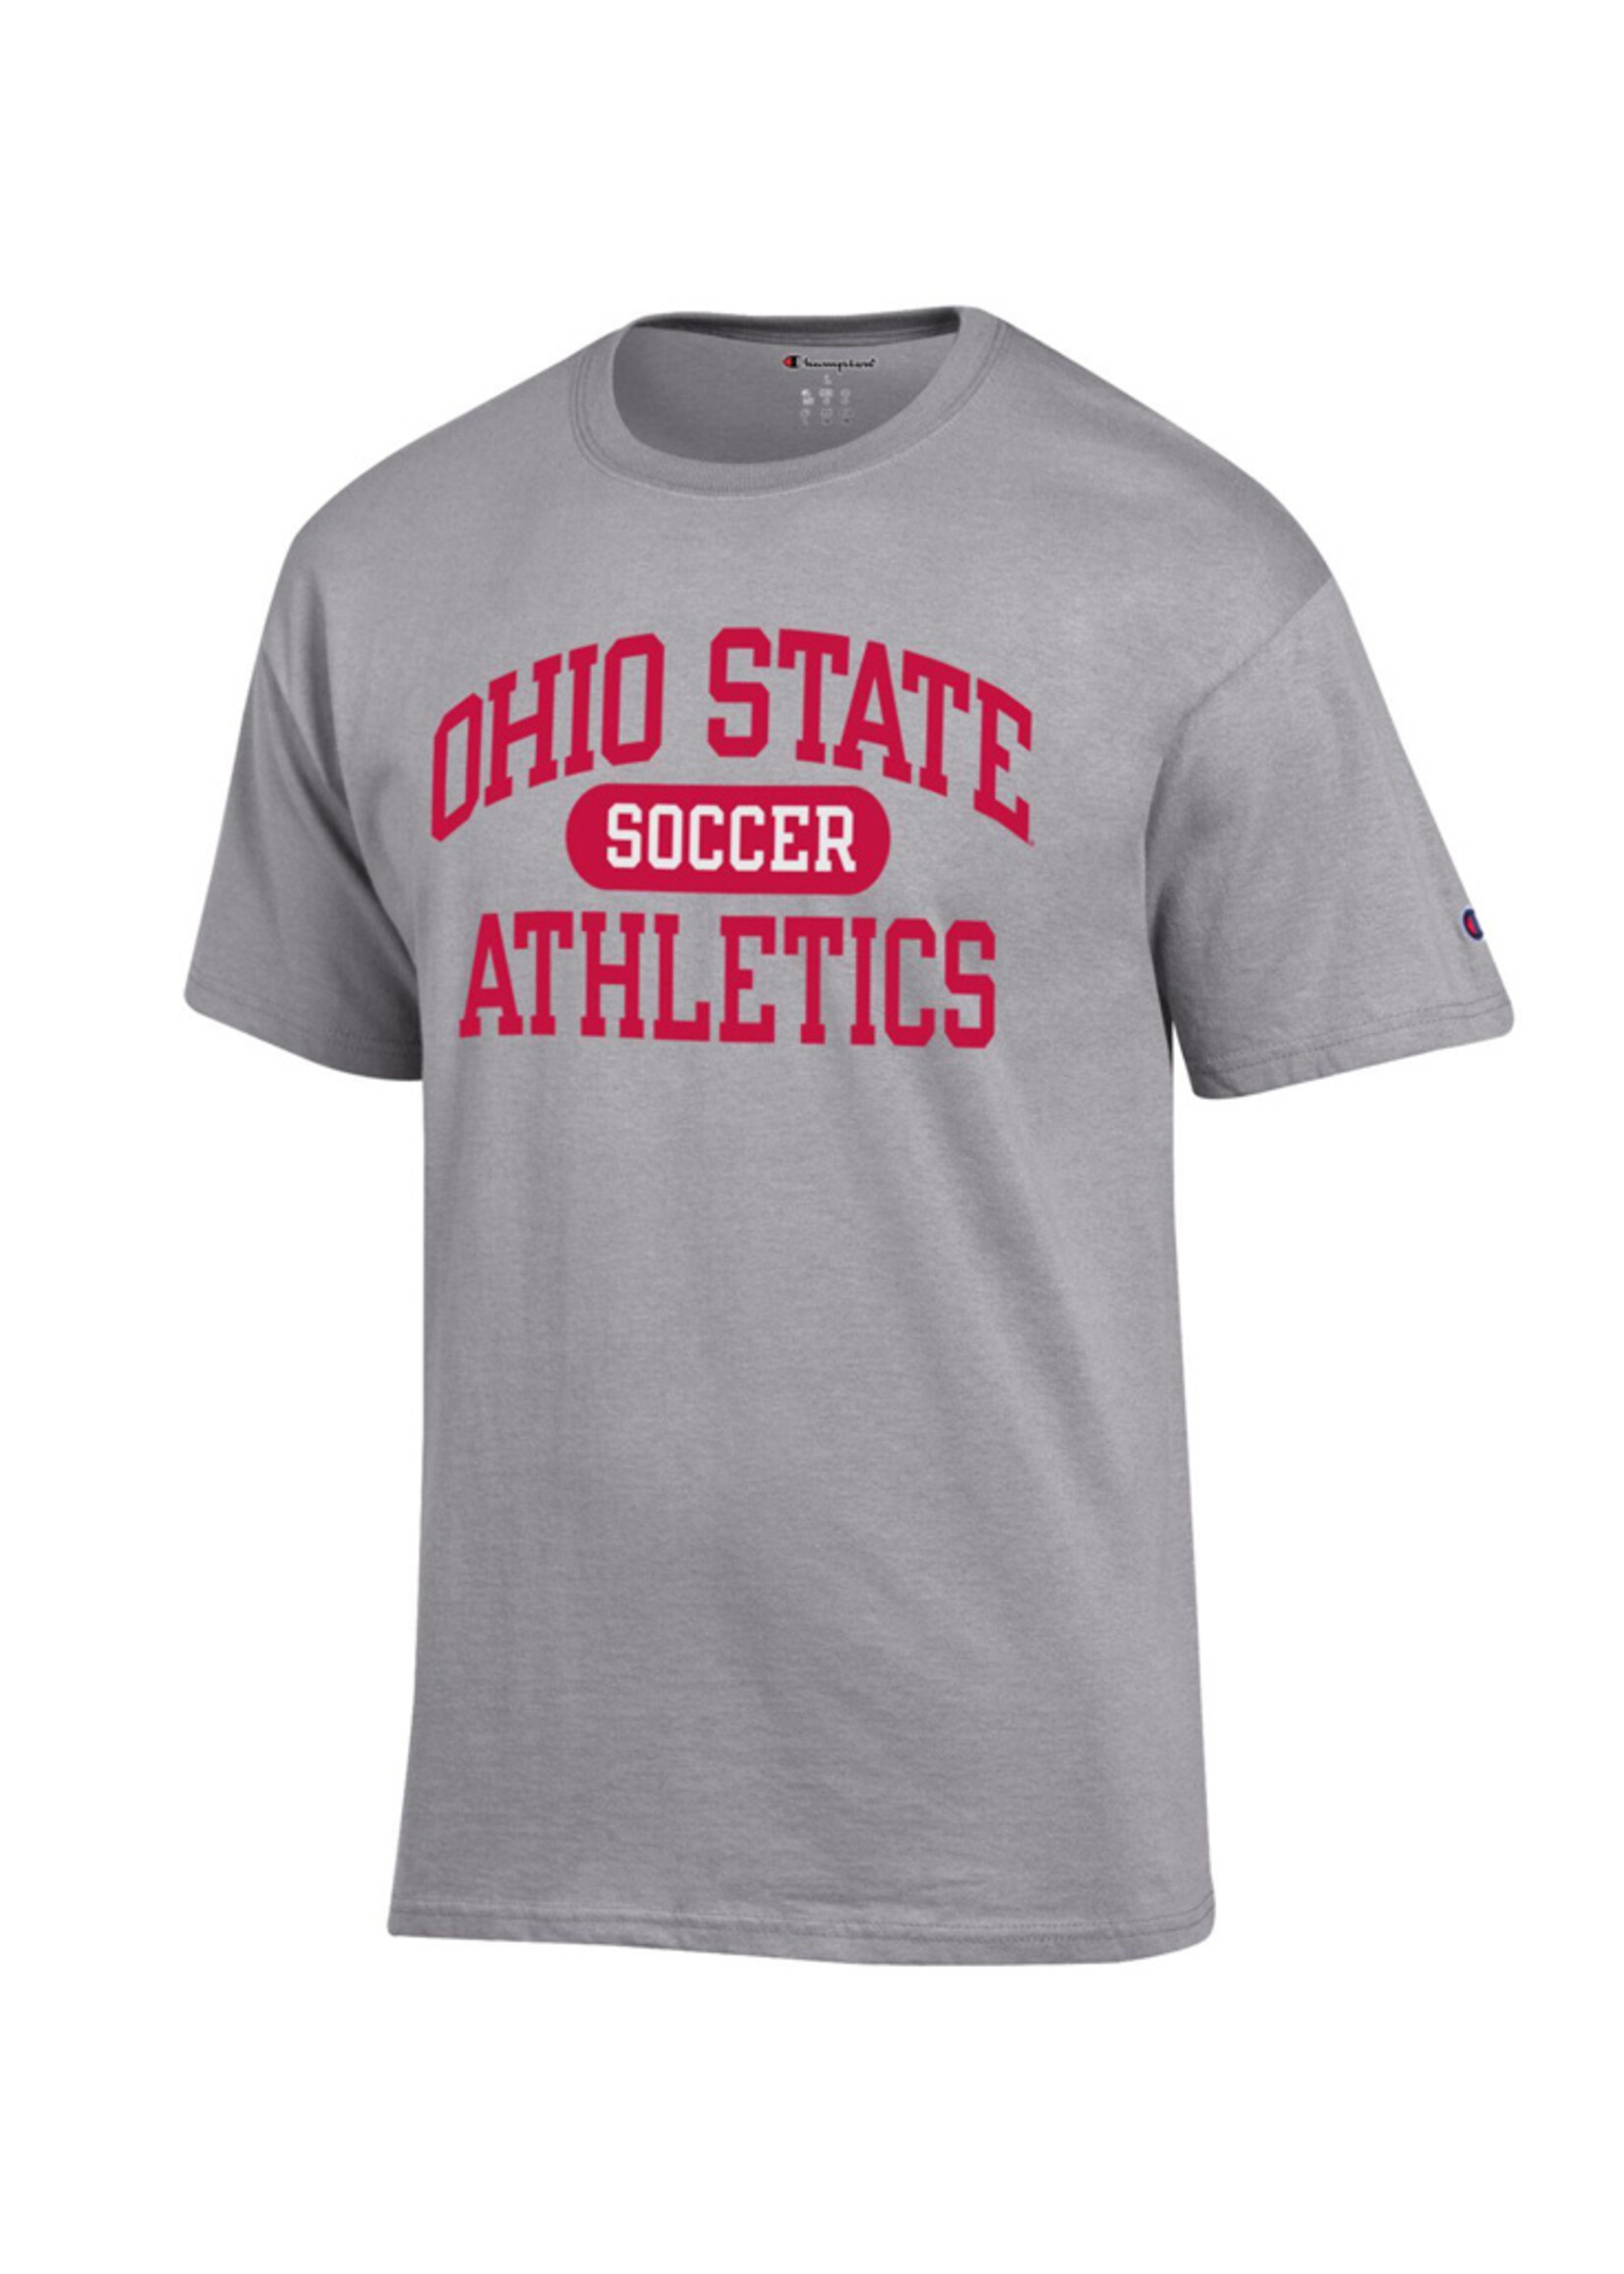 Ohio State Buckeyes Soccer T-Shirt